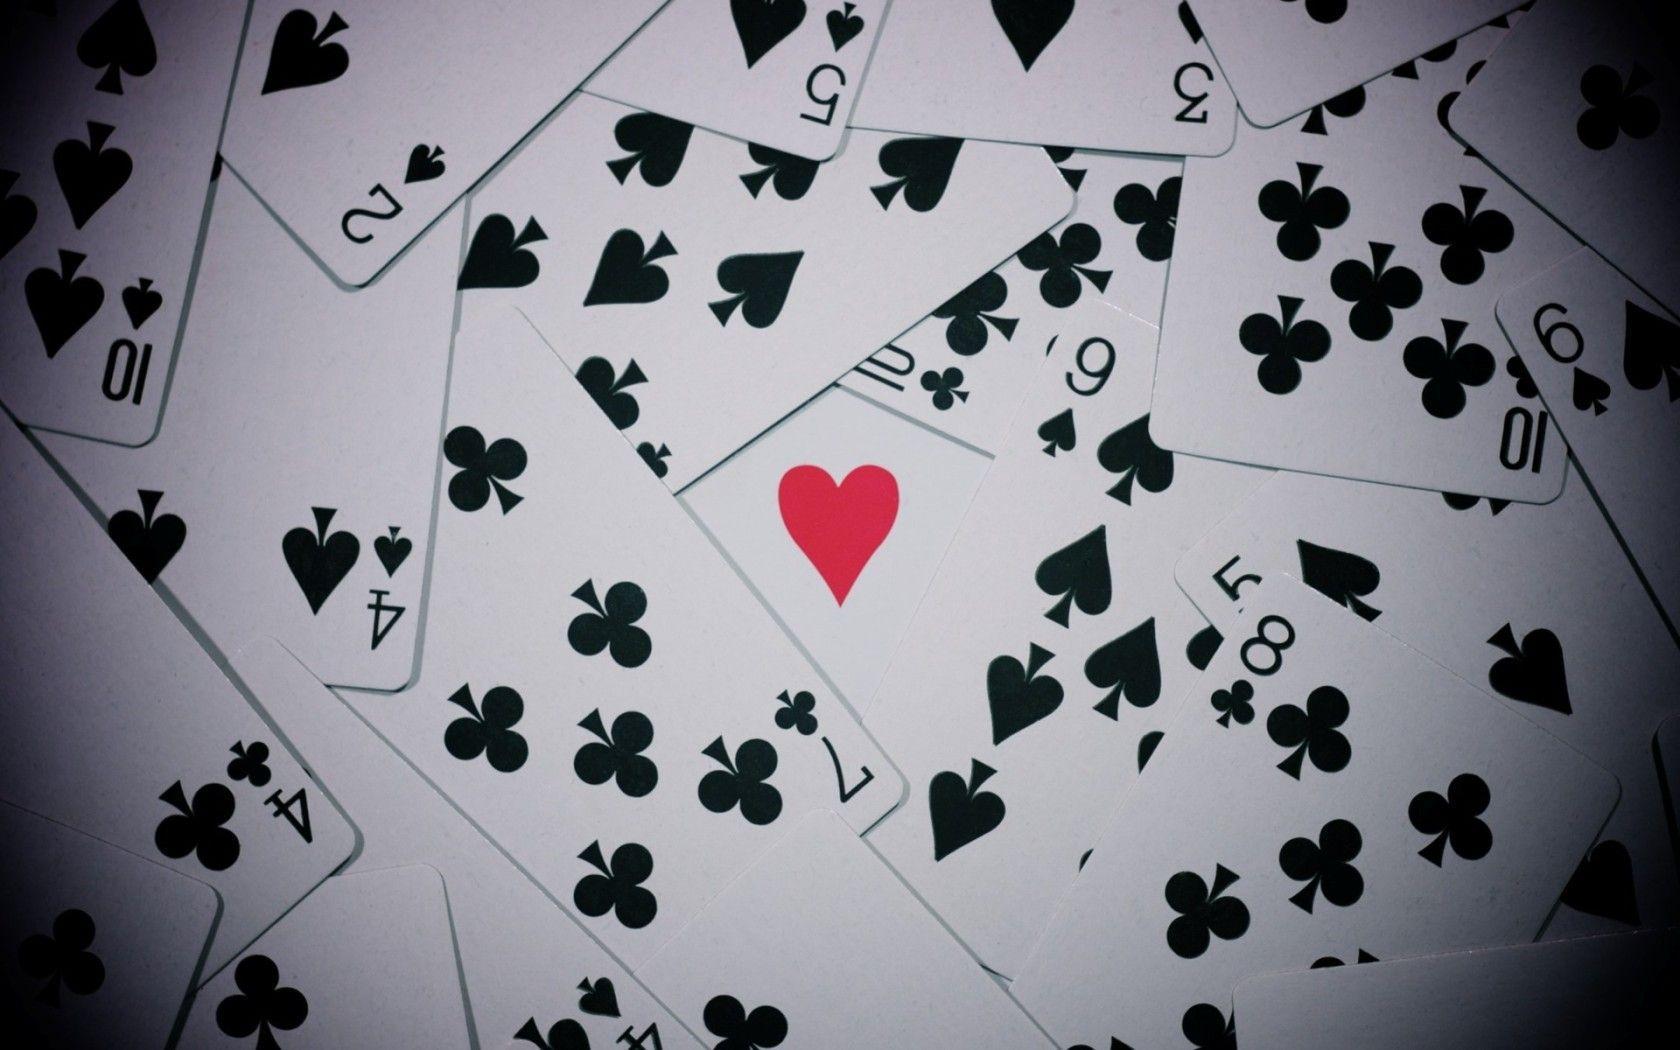 Casino Captivation: The Art and Aesthetics of Gambling